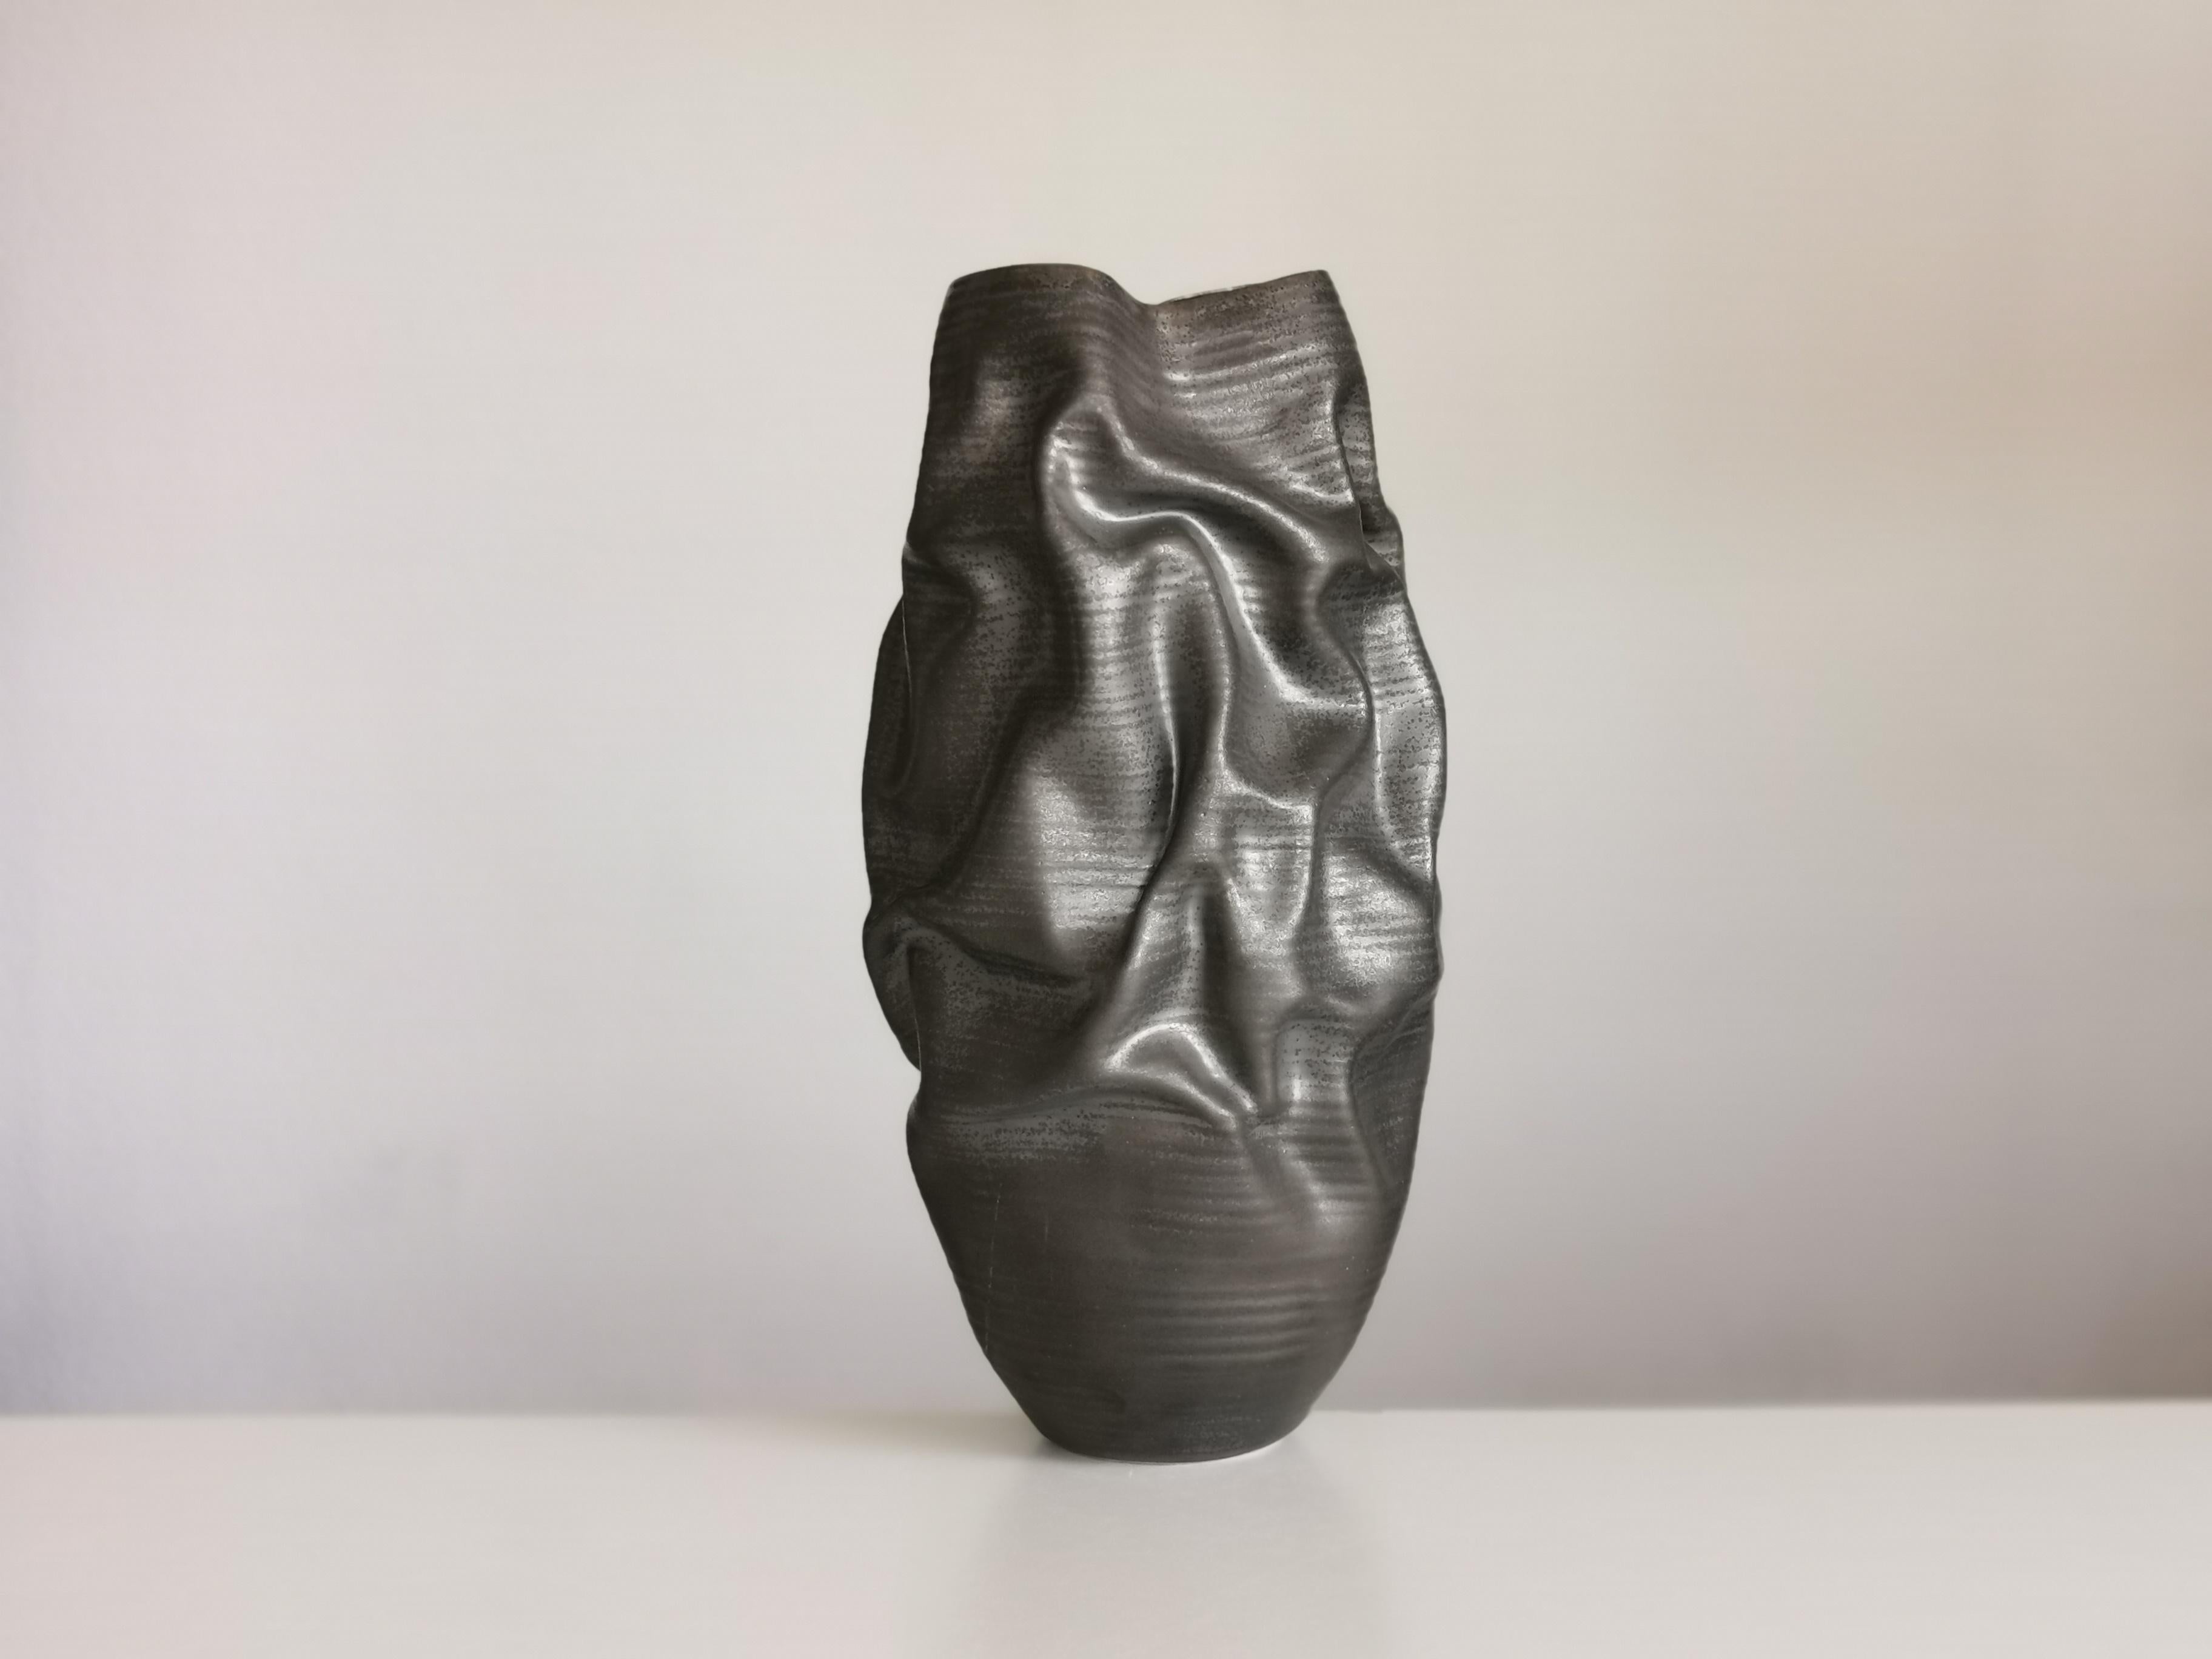 Pair of Unique Ceramic Sculptures Vessels 'Water Spirits' Objet d'Art 2